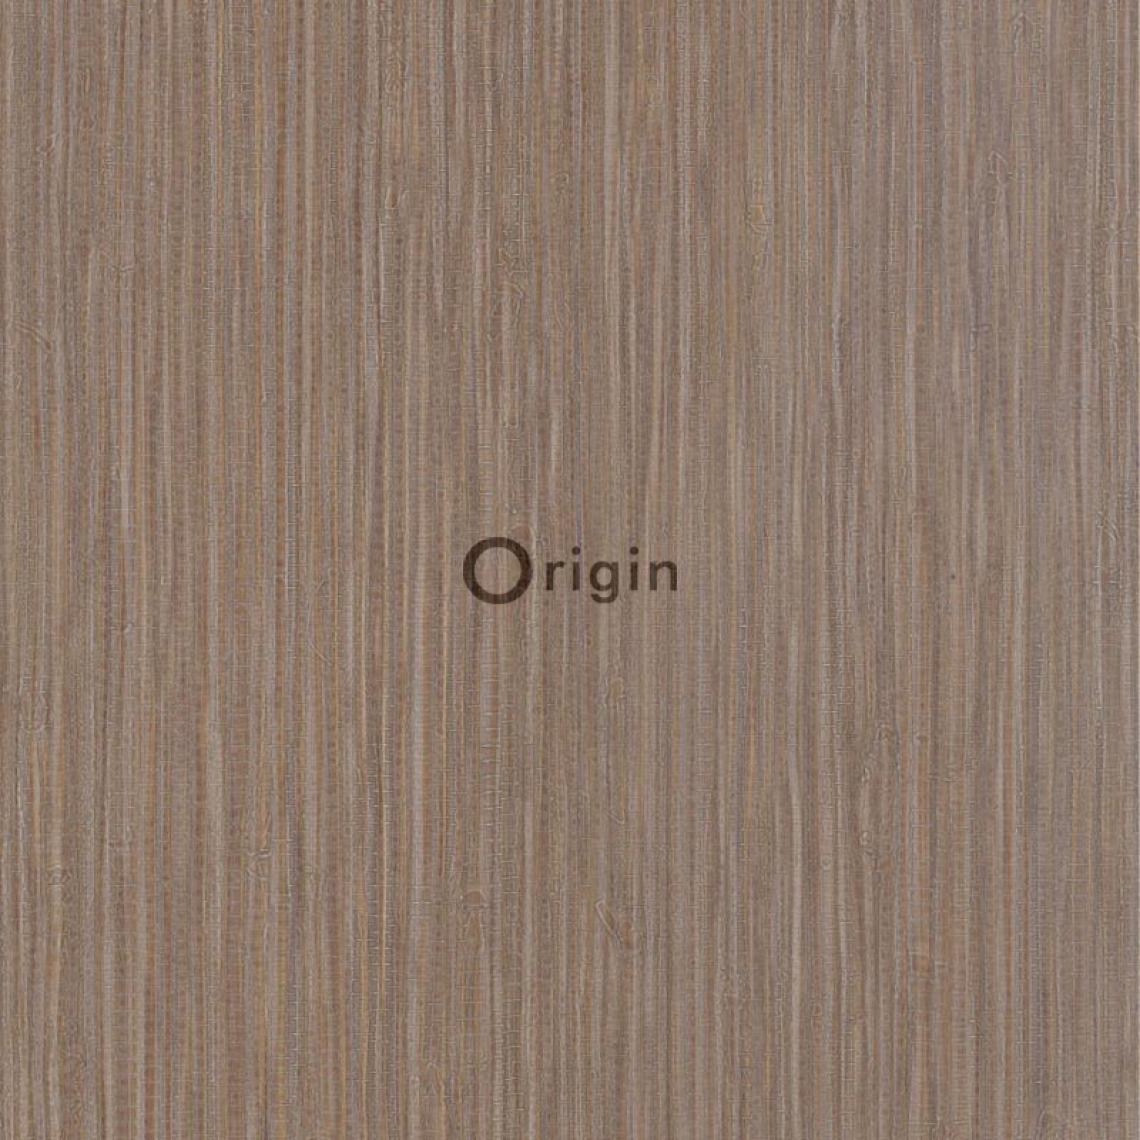 Origin - Origin papier peint lin marron - 306442 - 53 cm x 10,05 m - Papier peint